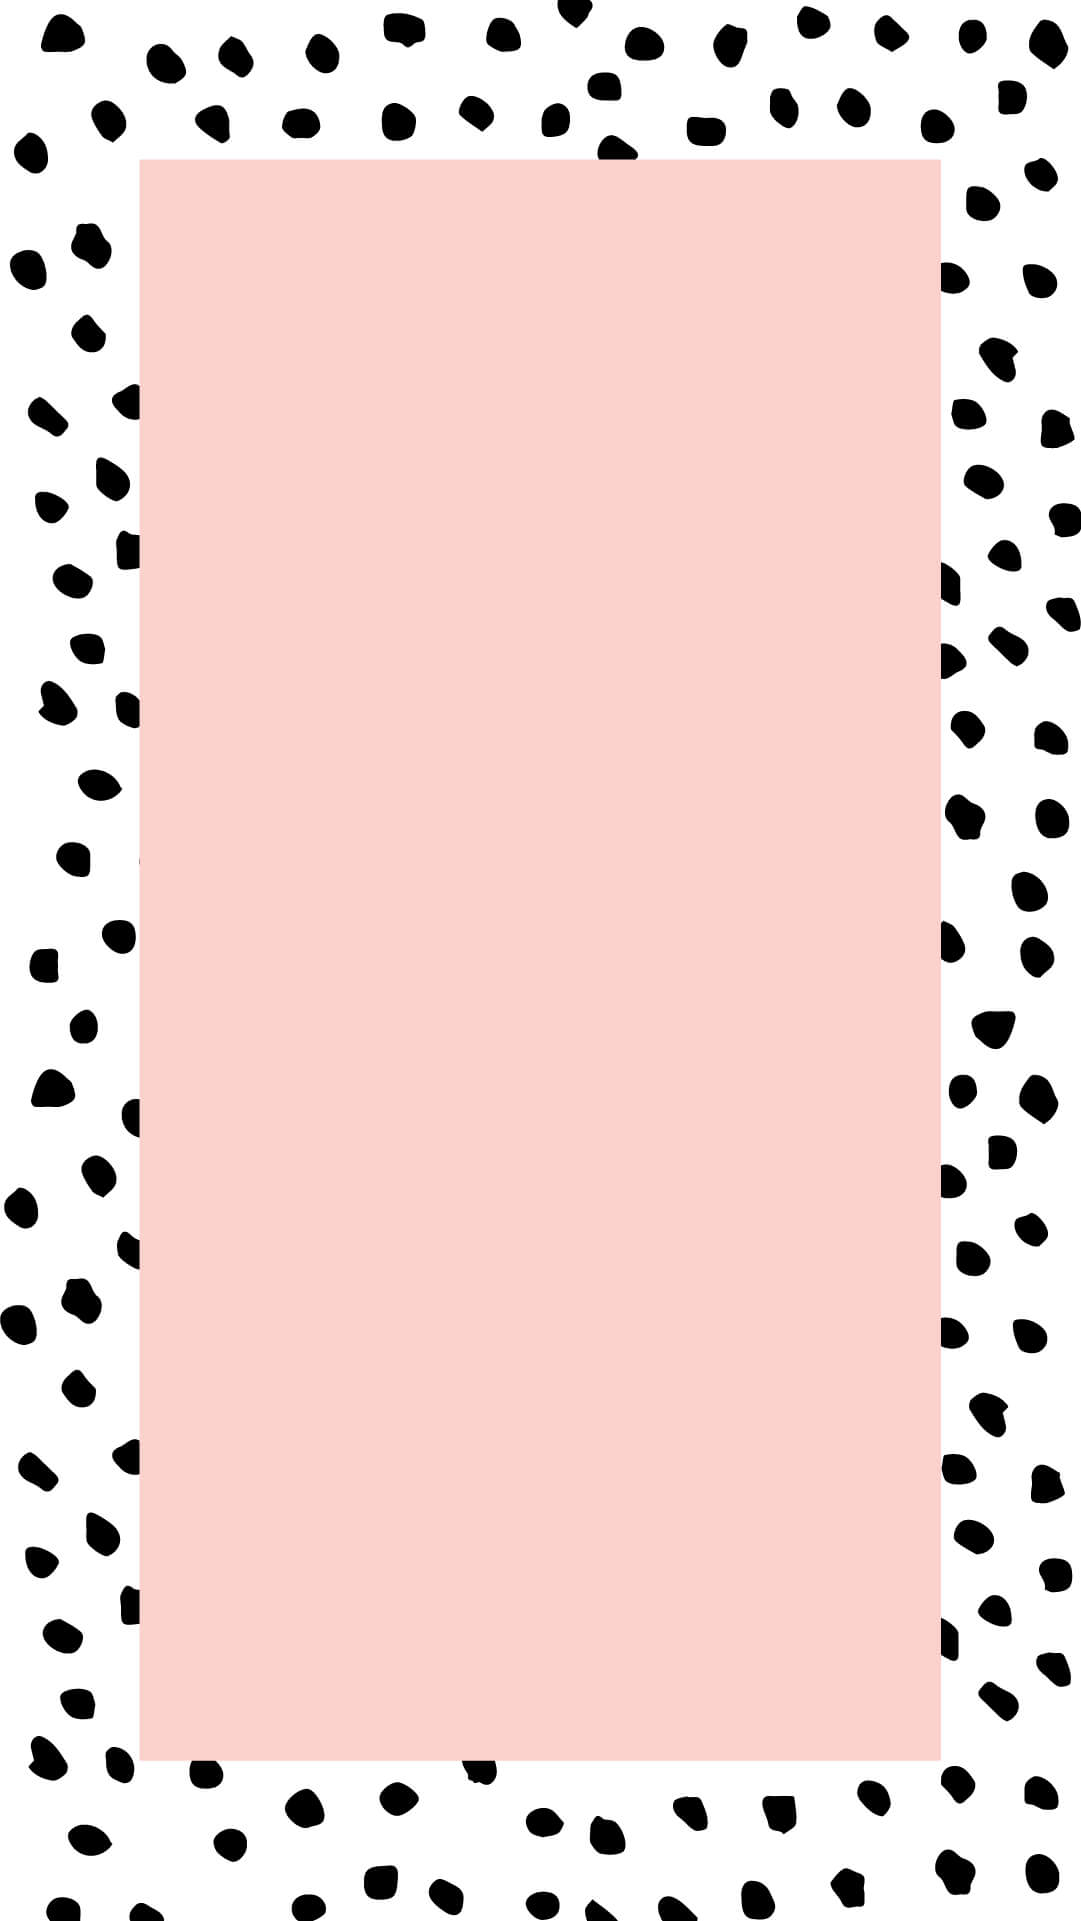 A pink background with an irregular polka dot border